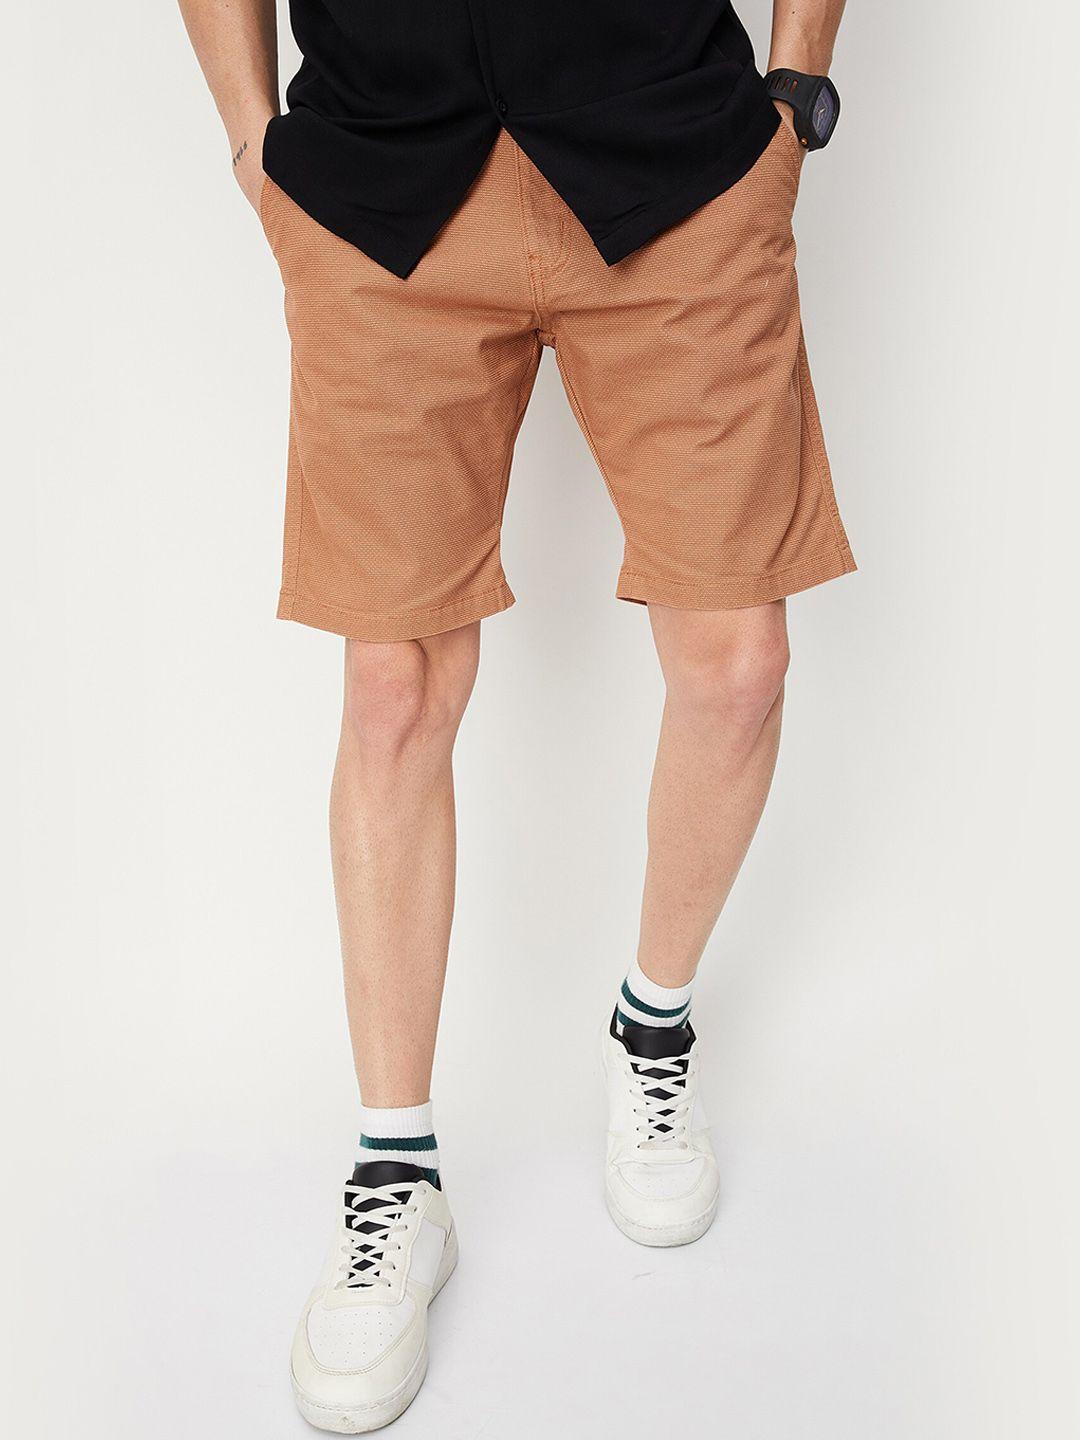 max-men-pure-cotton-mid-rise-shorts